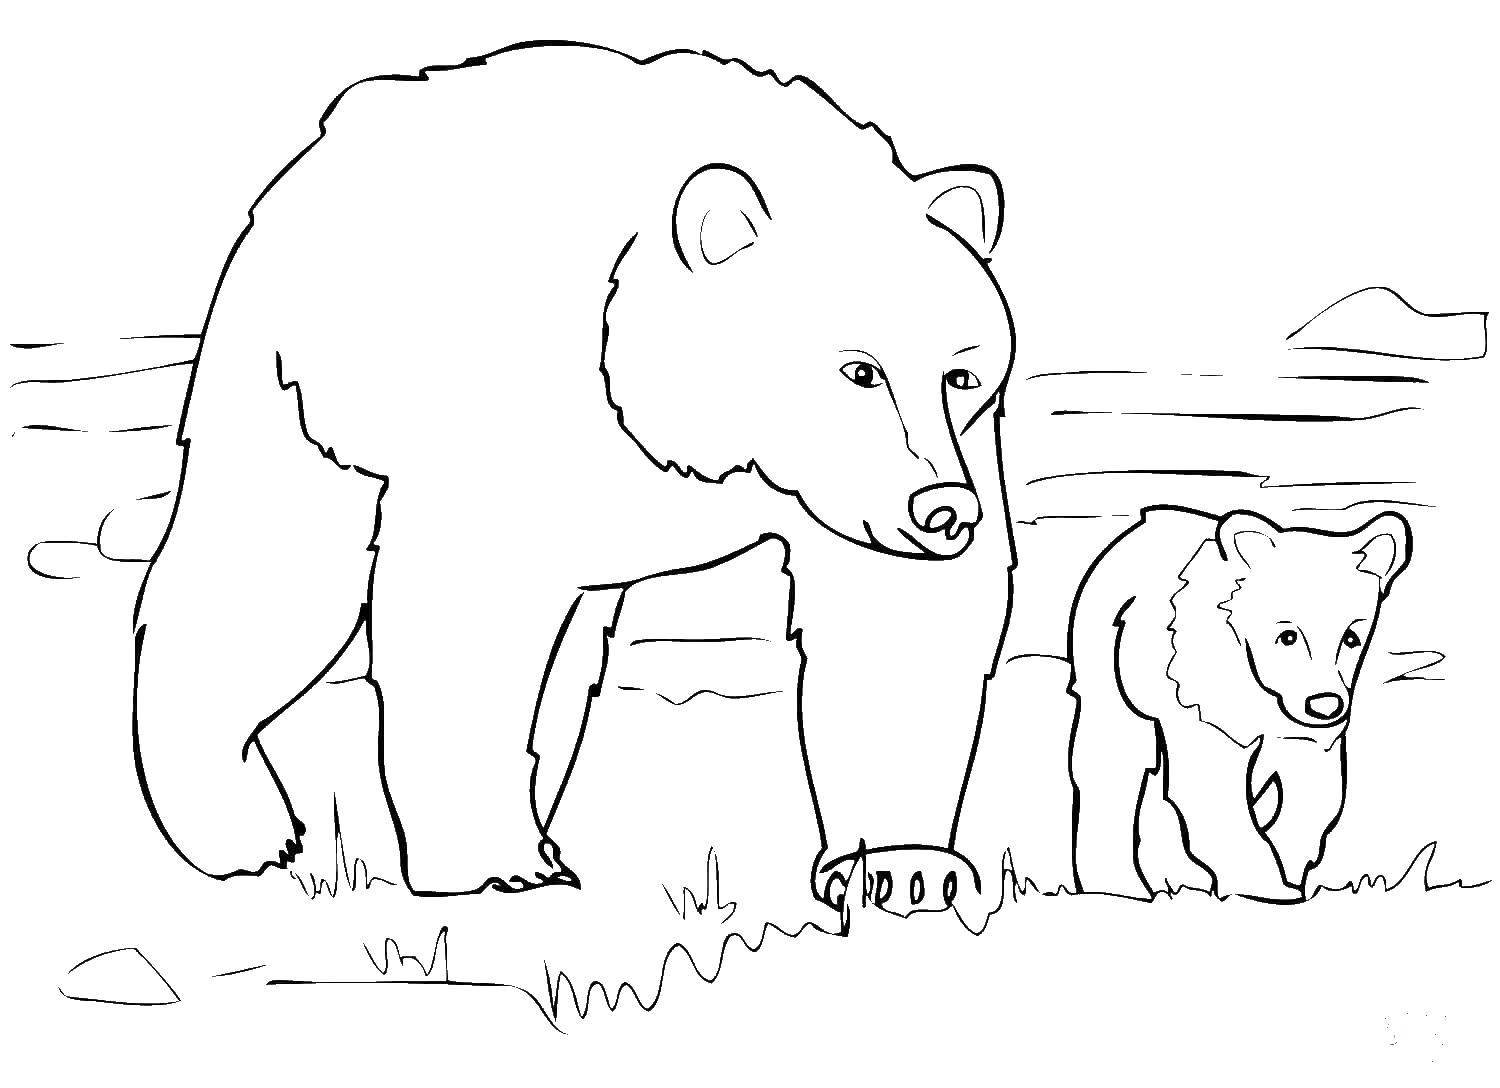 Impressive bear drawing for kids